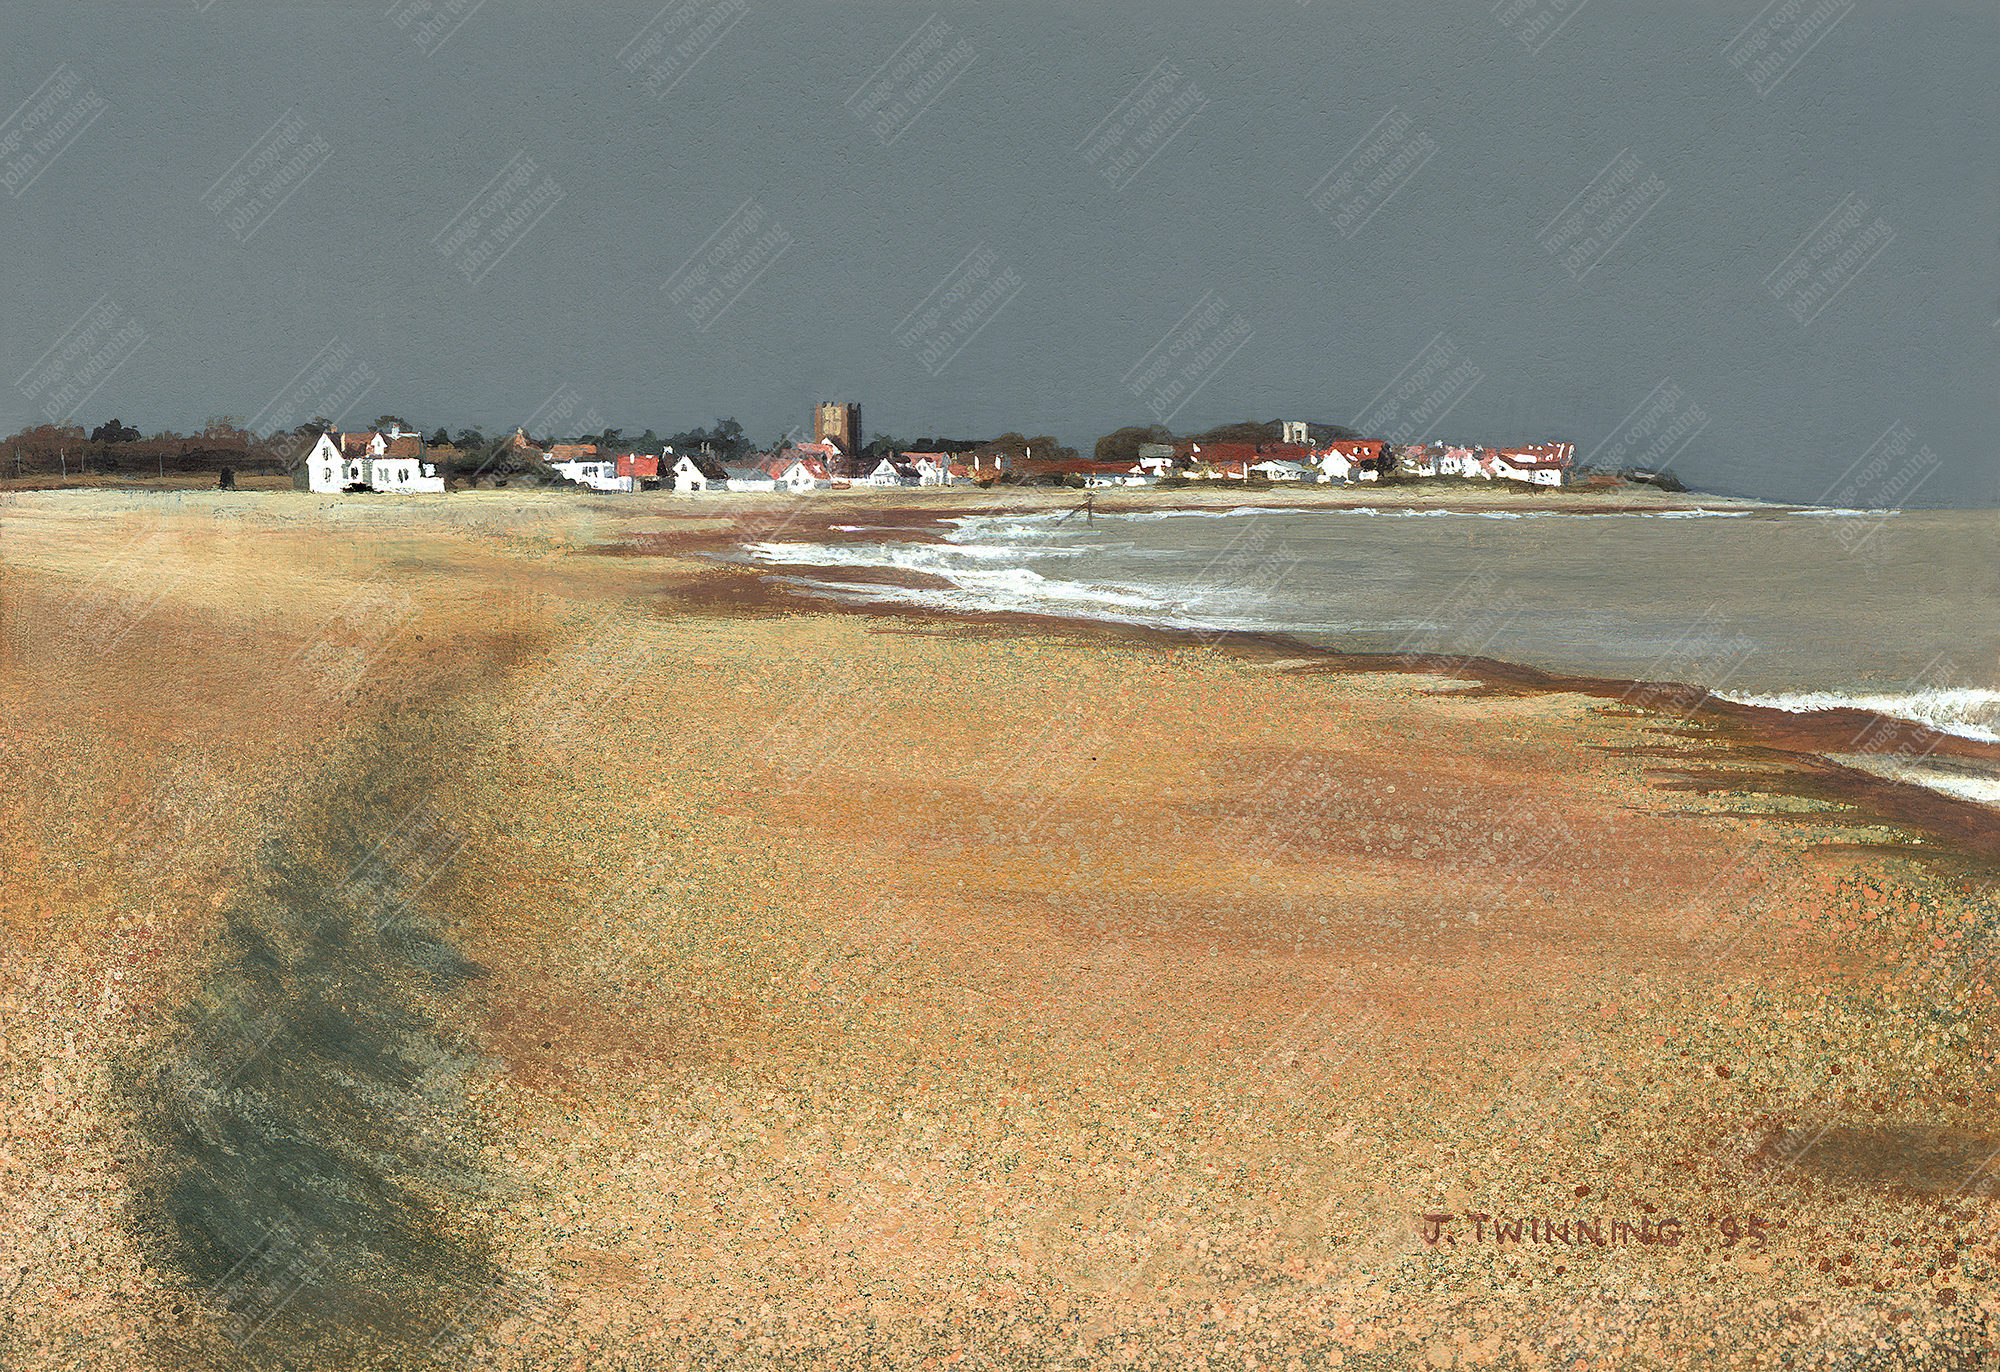 'Towards Thorpeness, Passing Storm' - marine/maritime art print from a coastal seascape painting